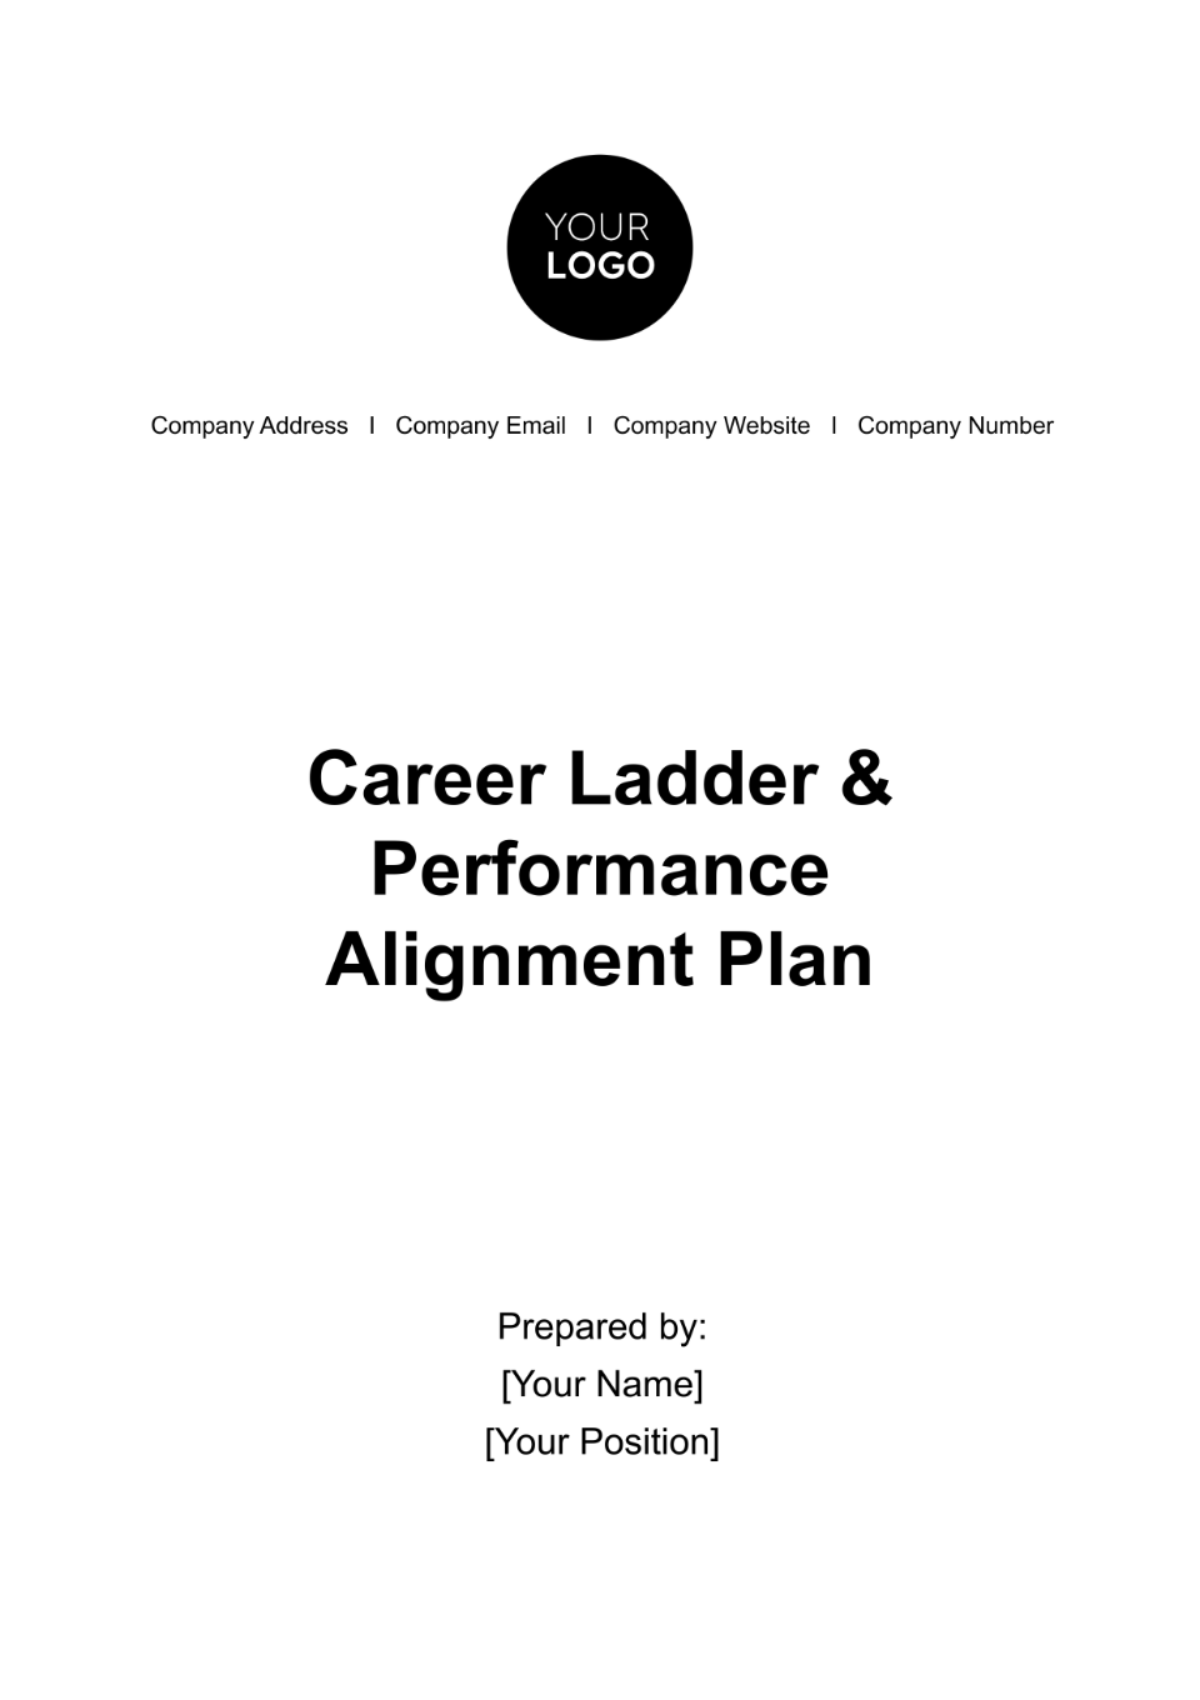 Free Career Ladder & Performance Alignment Plan HR Template